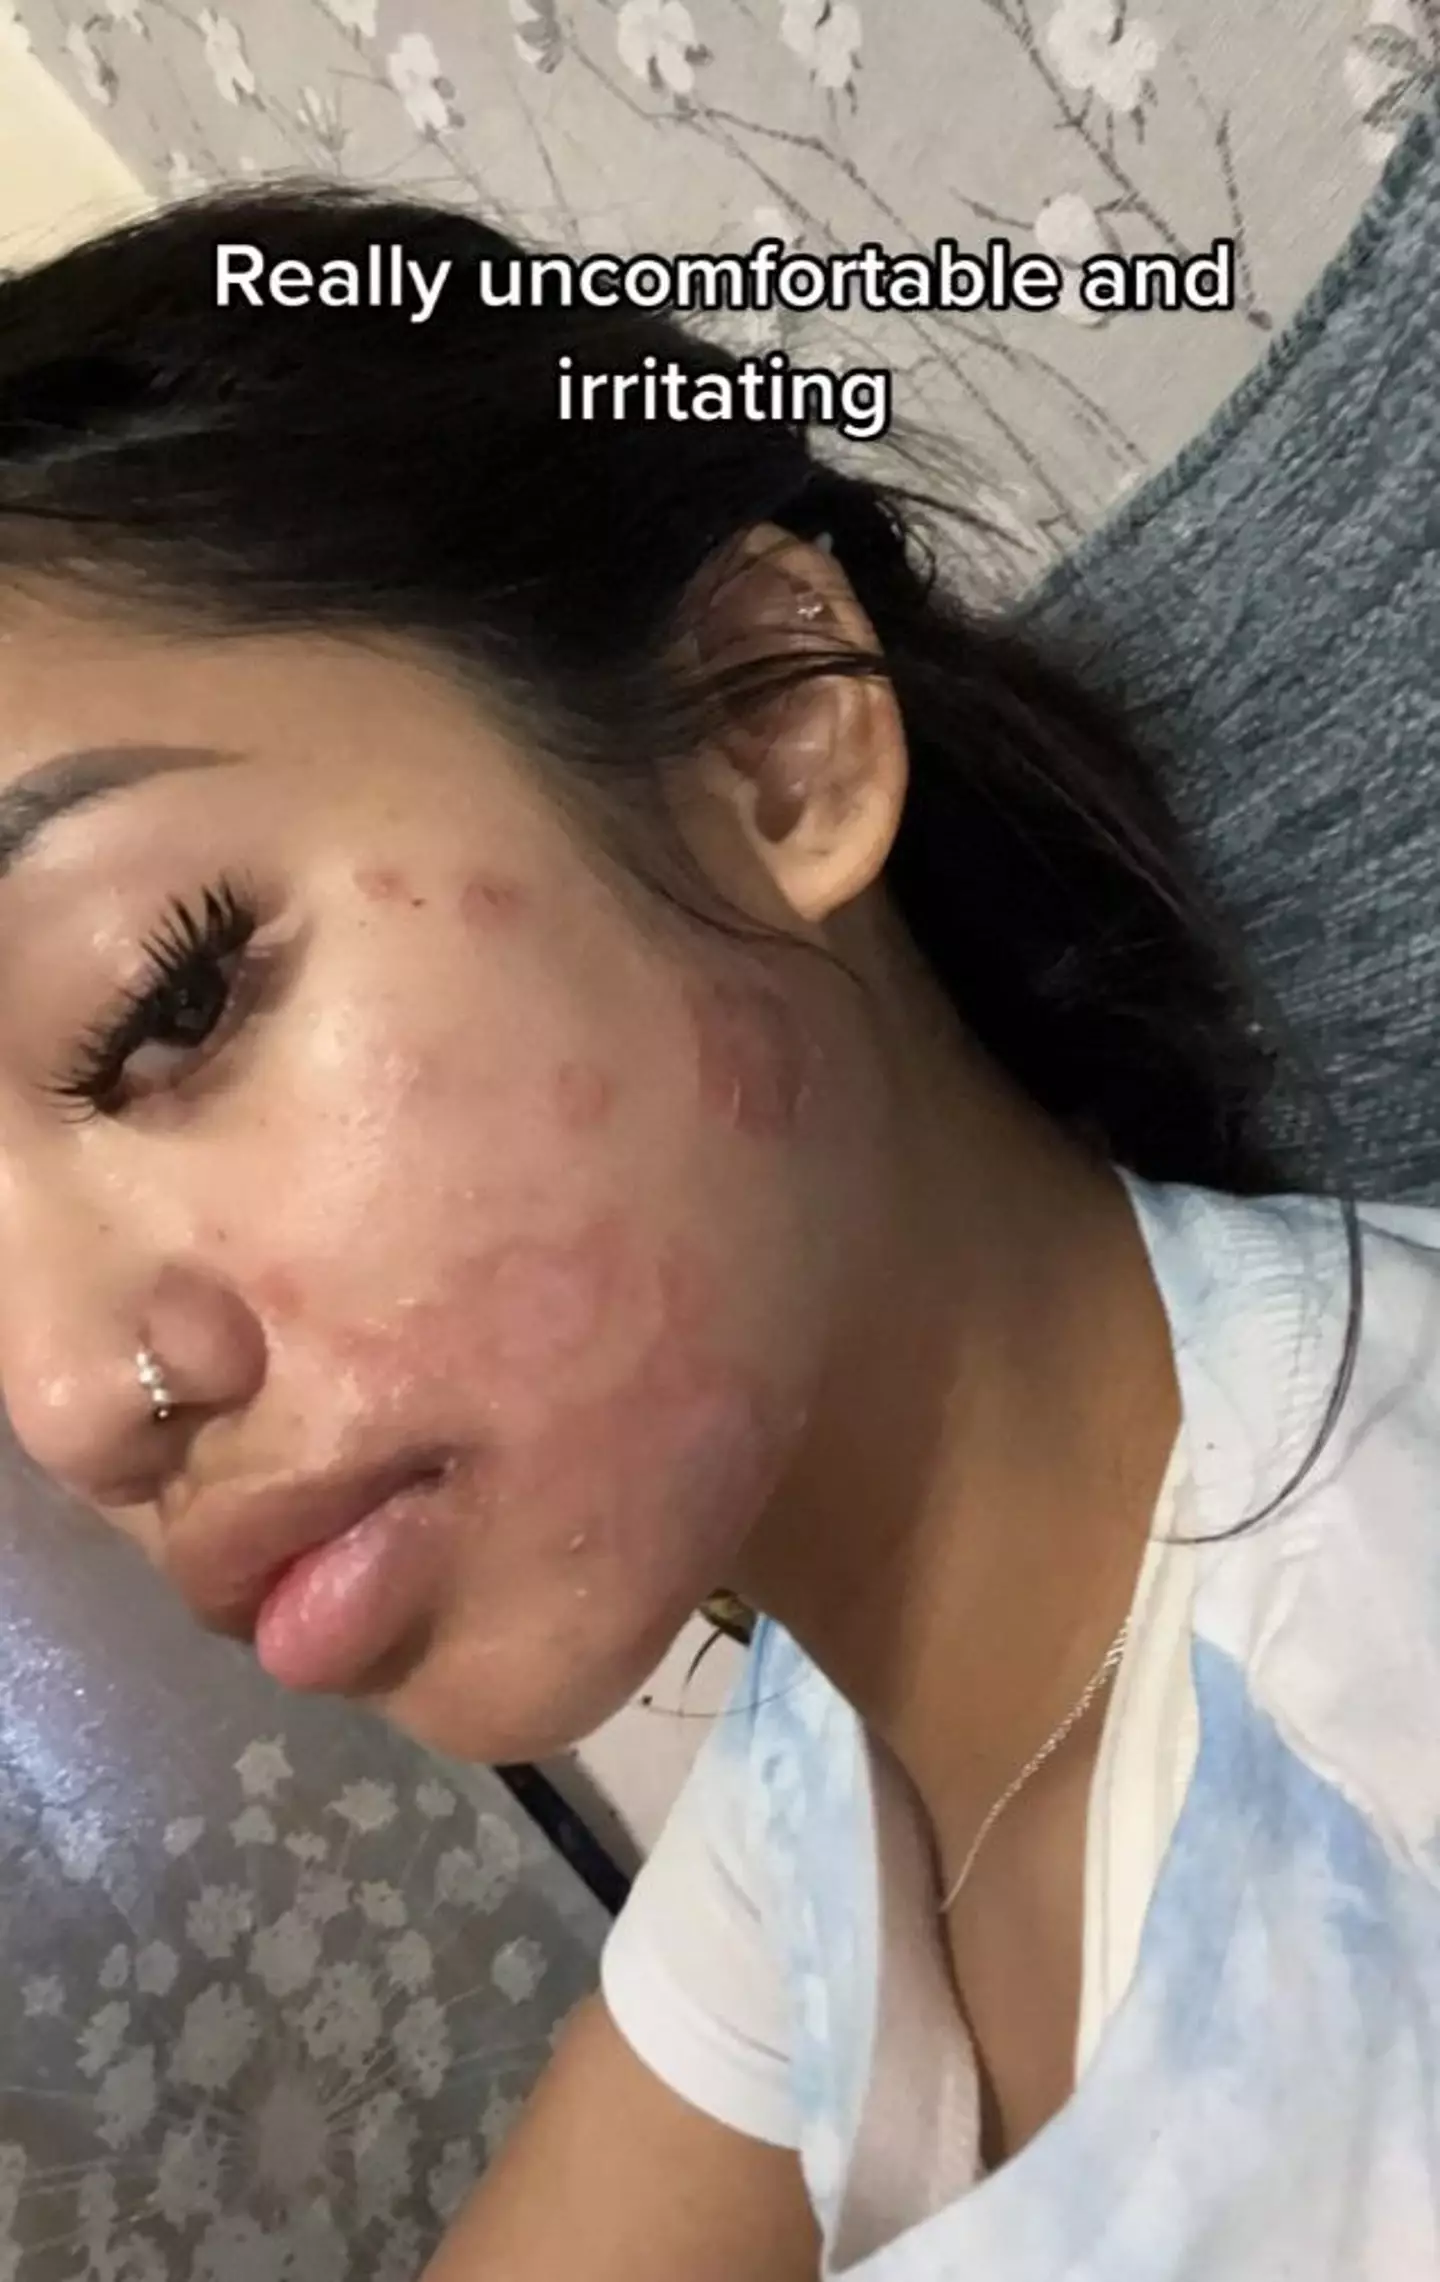 Louaira Dela Cruz shared videos of her rashes to TikTok.